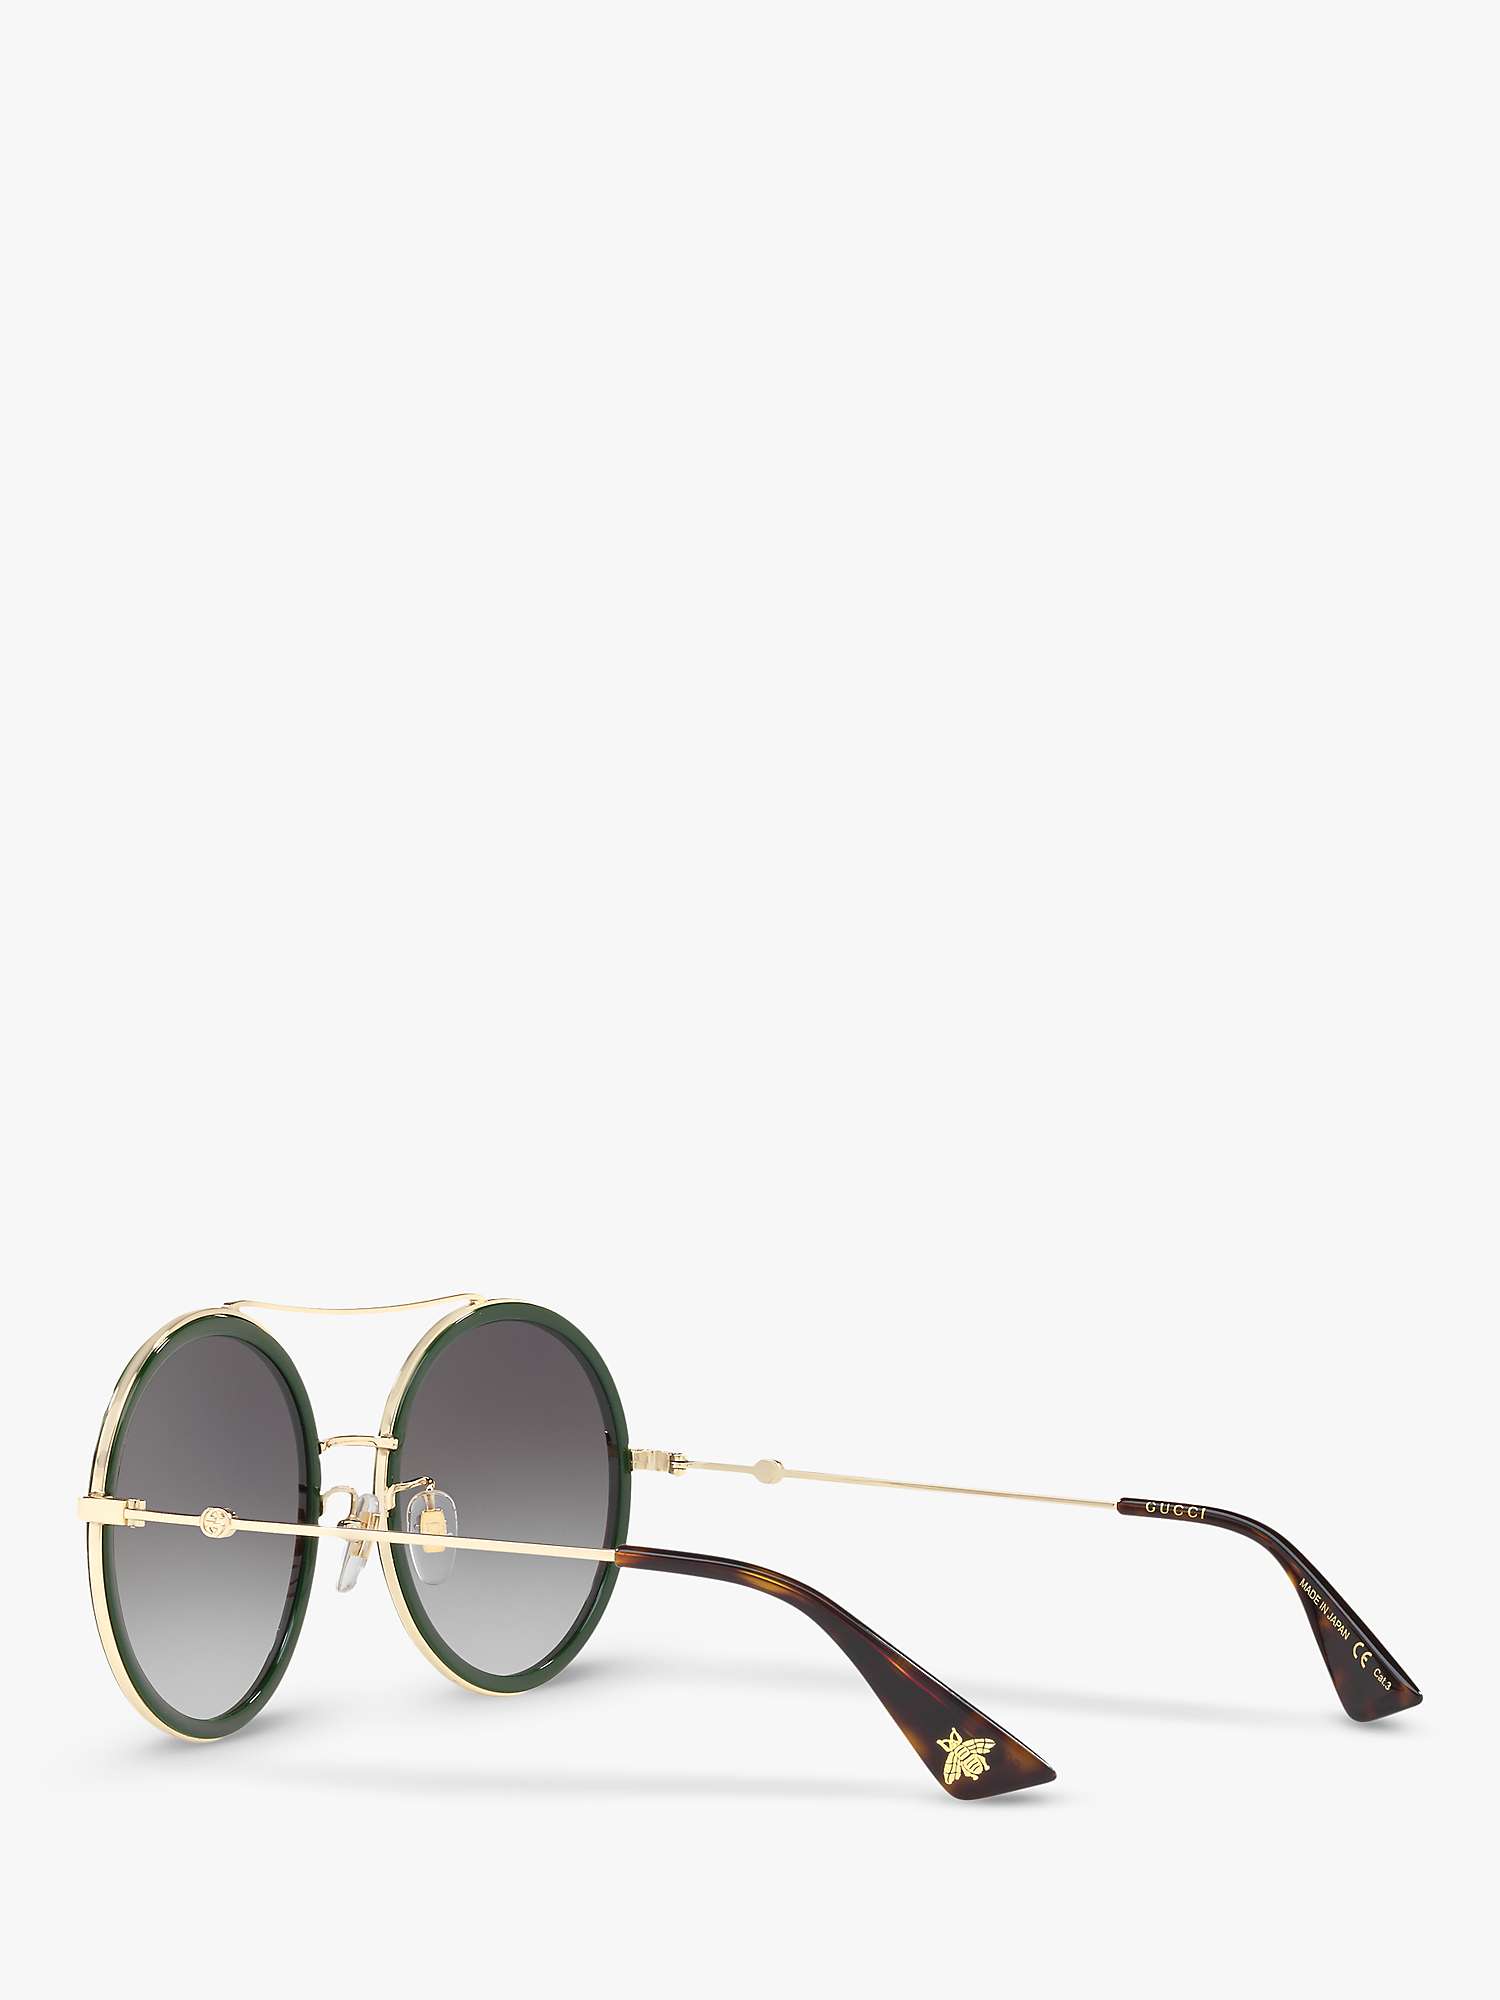 Buy Gucci GG0061S Women's Polarised Round Sunglasses, Gold/Grey Gradient Online at johnlewis.com